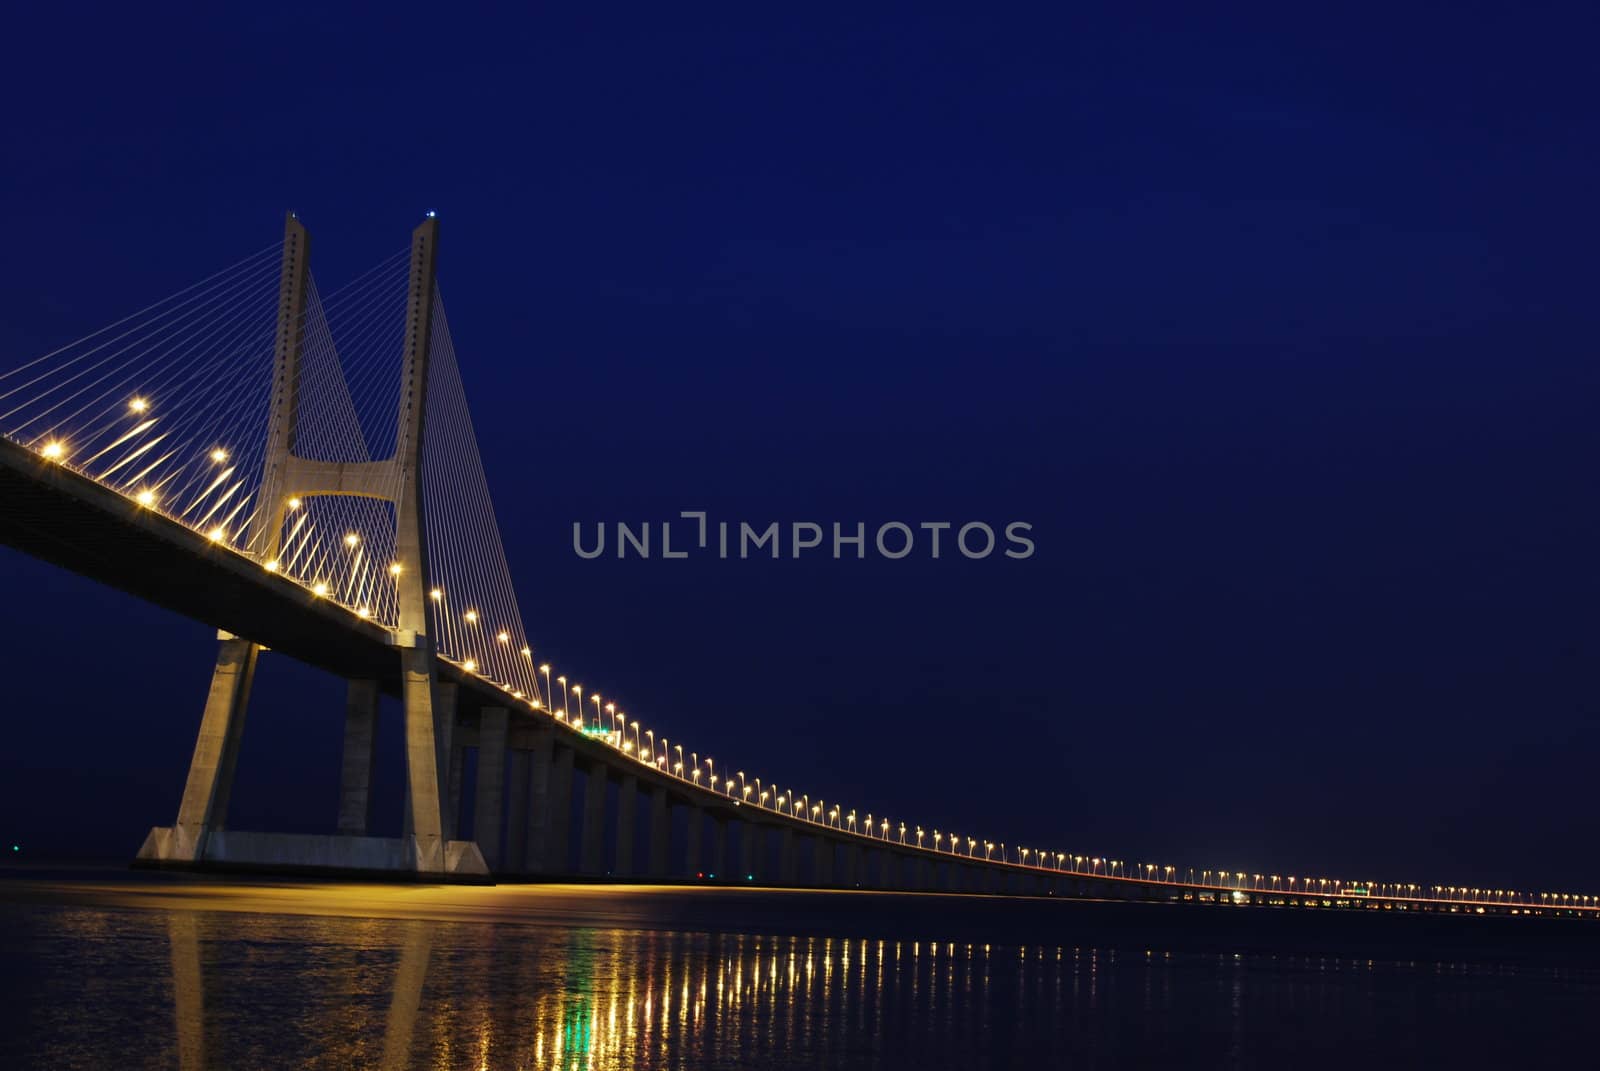 night shoot of Vasco da Gama Bridge in Lisbon, Portugal